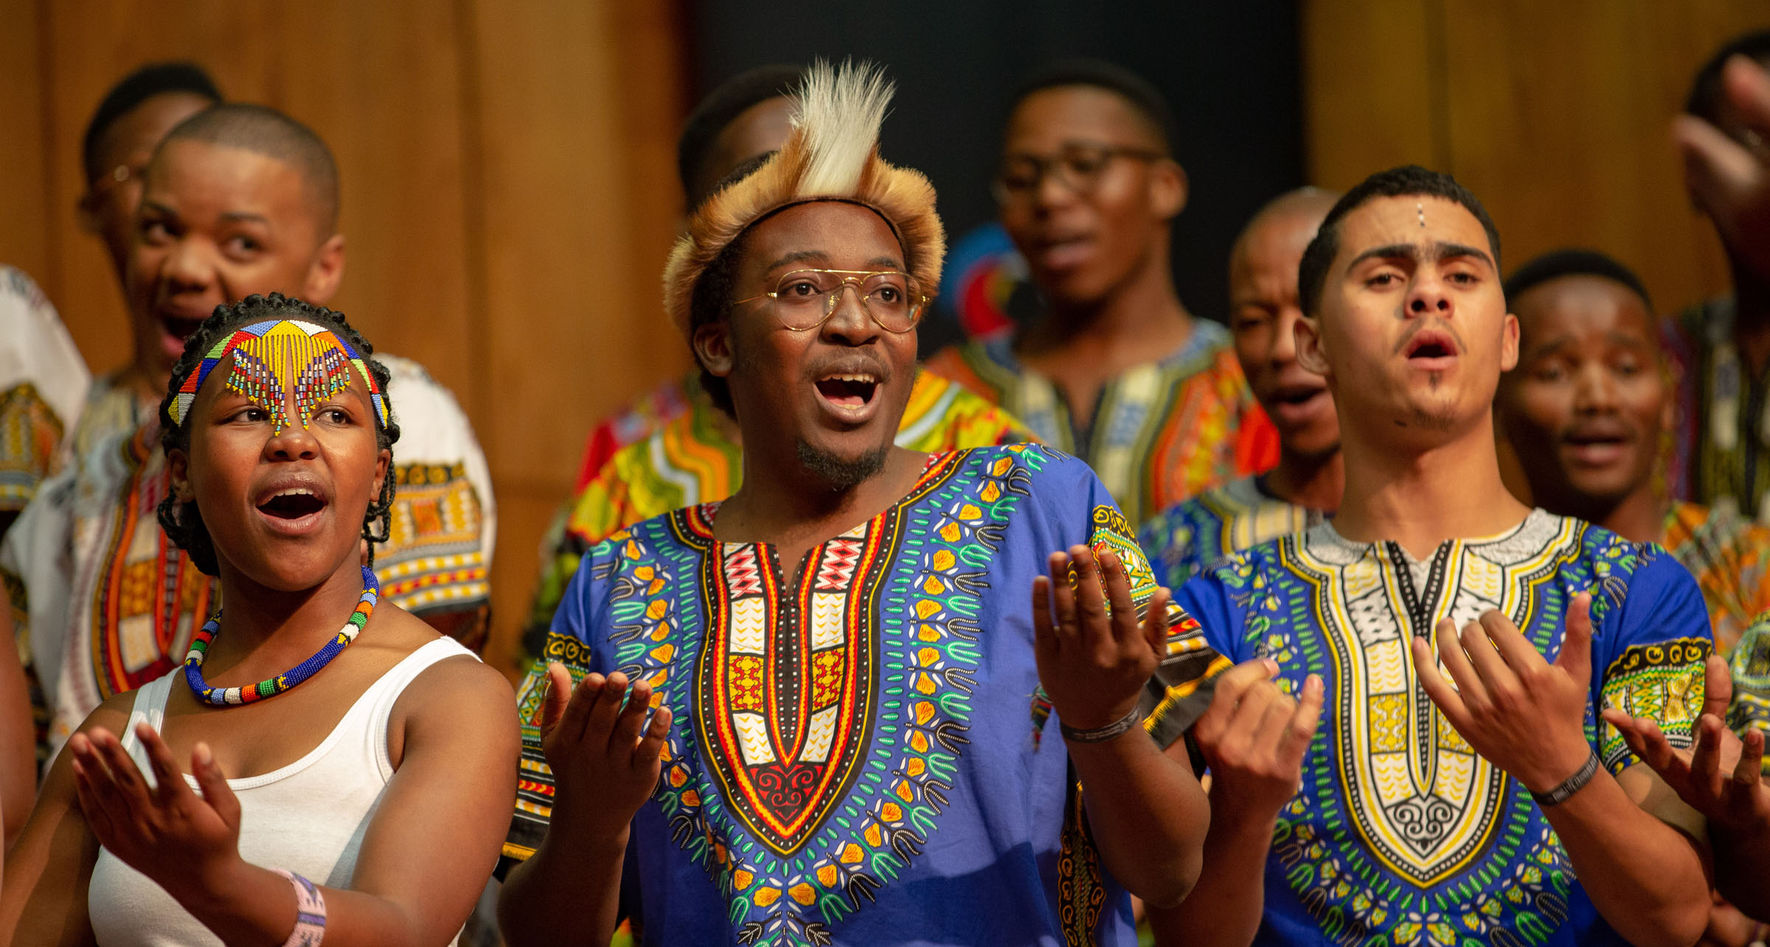 Western Cape University Choir, South Africa © Nolte Photography